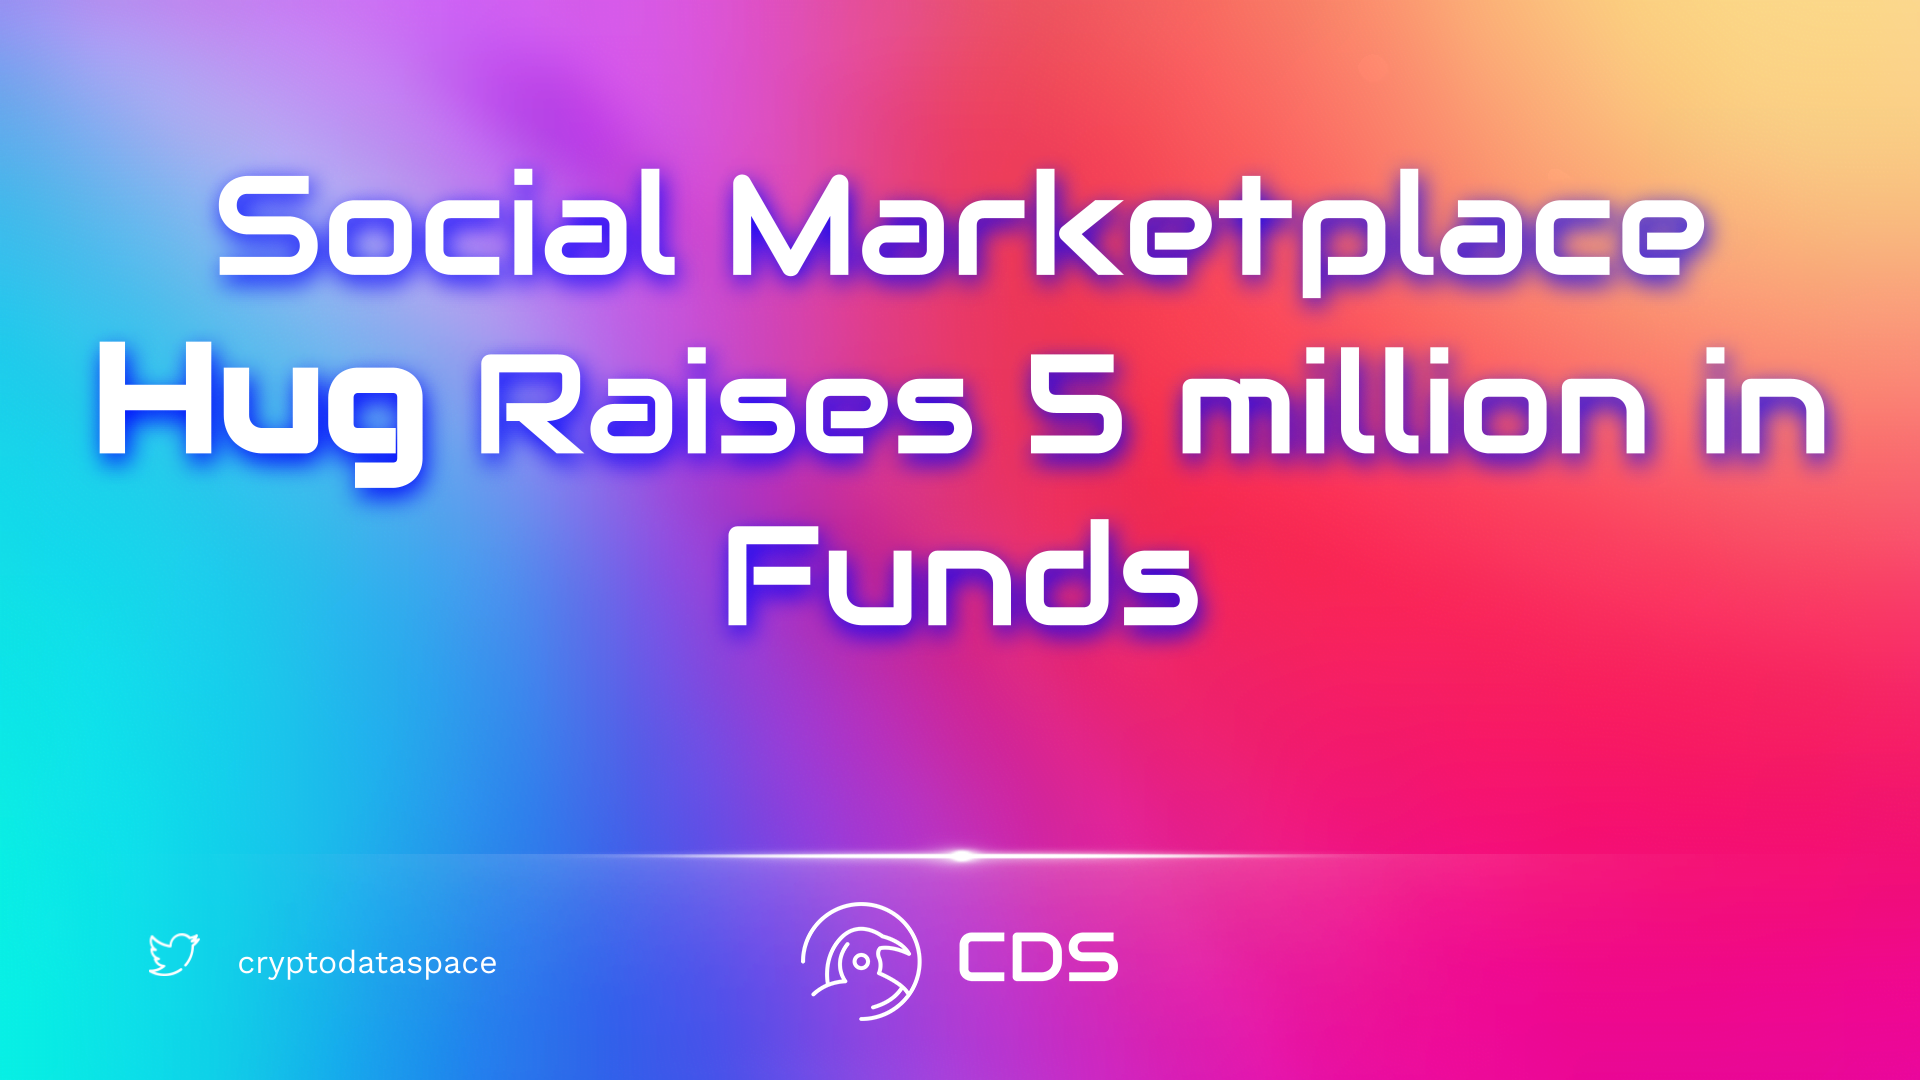 Social Marketplace Hug Raises 5 million in Funds